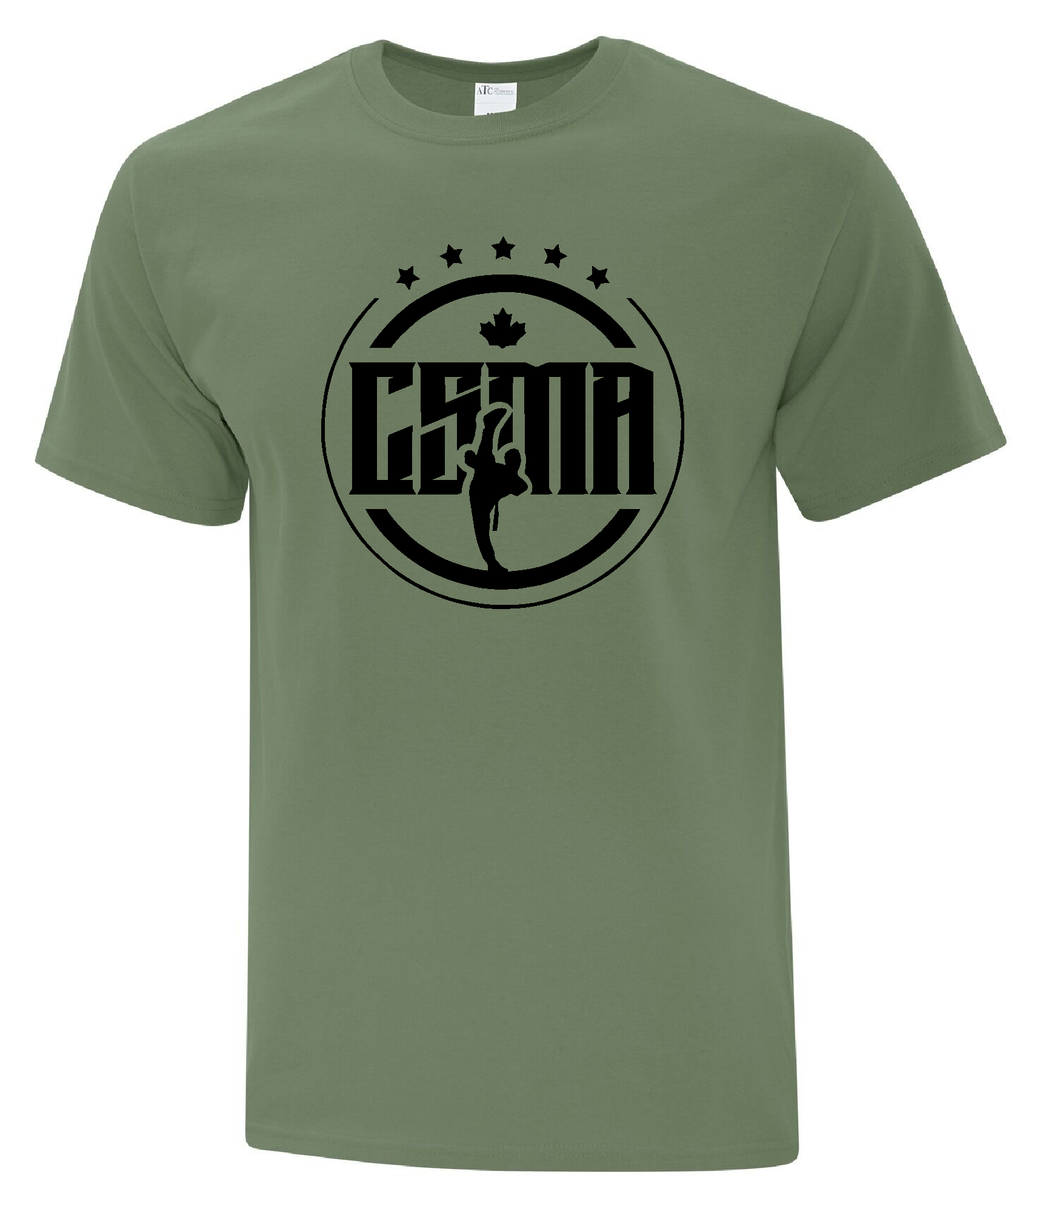 Men's Army Green T-Shirt - CSMA logo   *LIMITED EDITION*